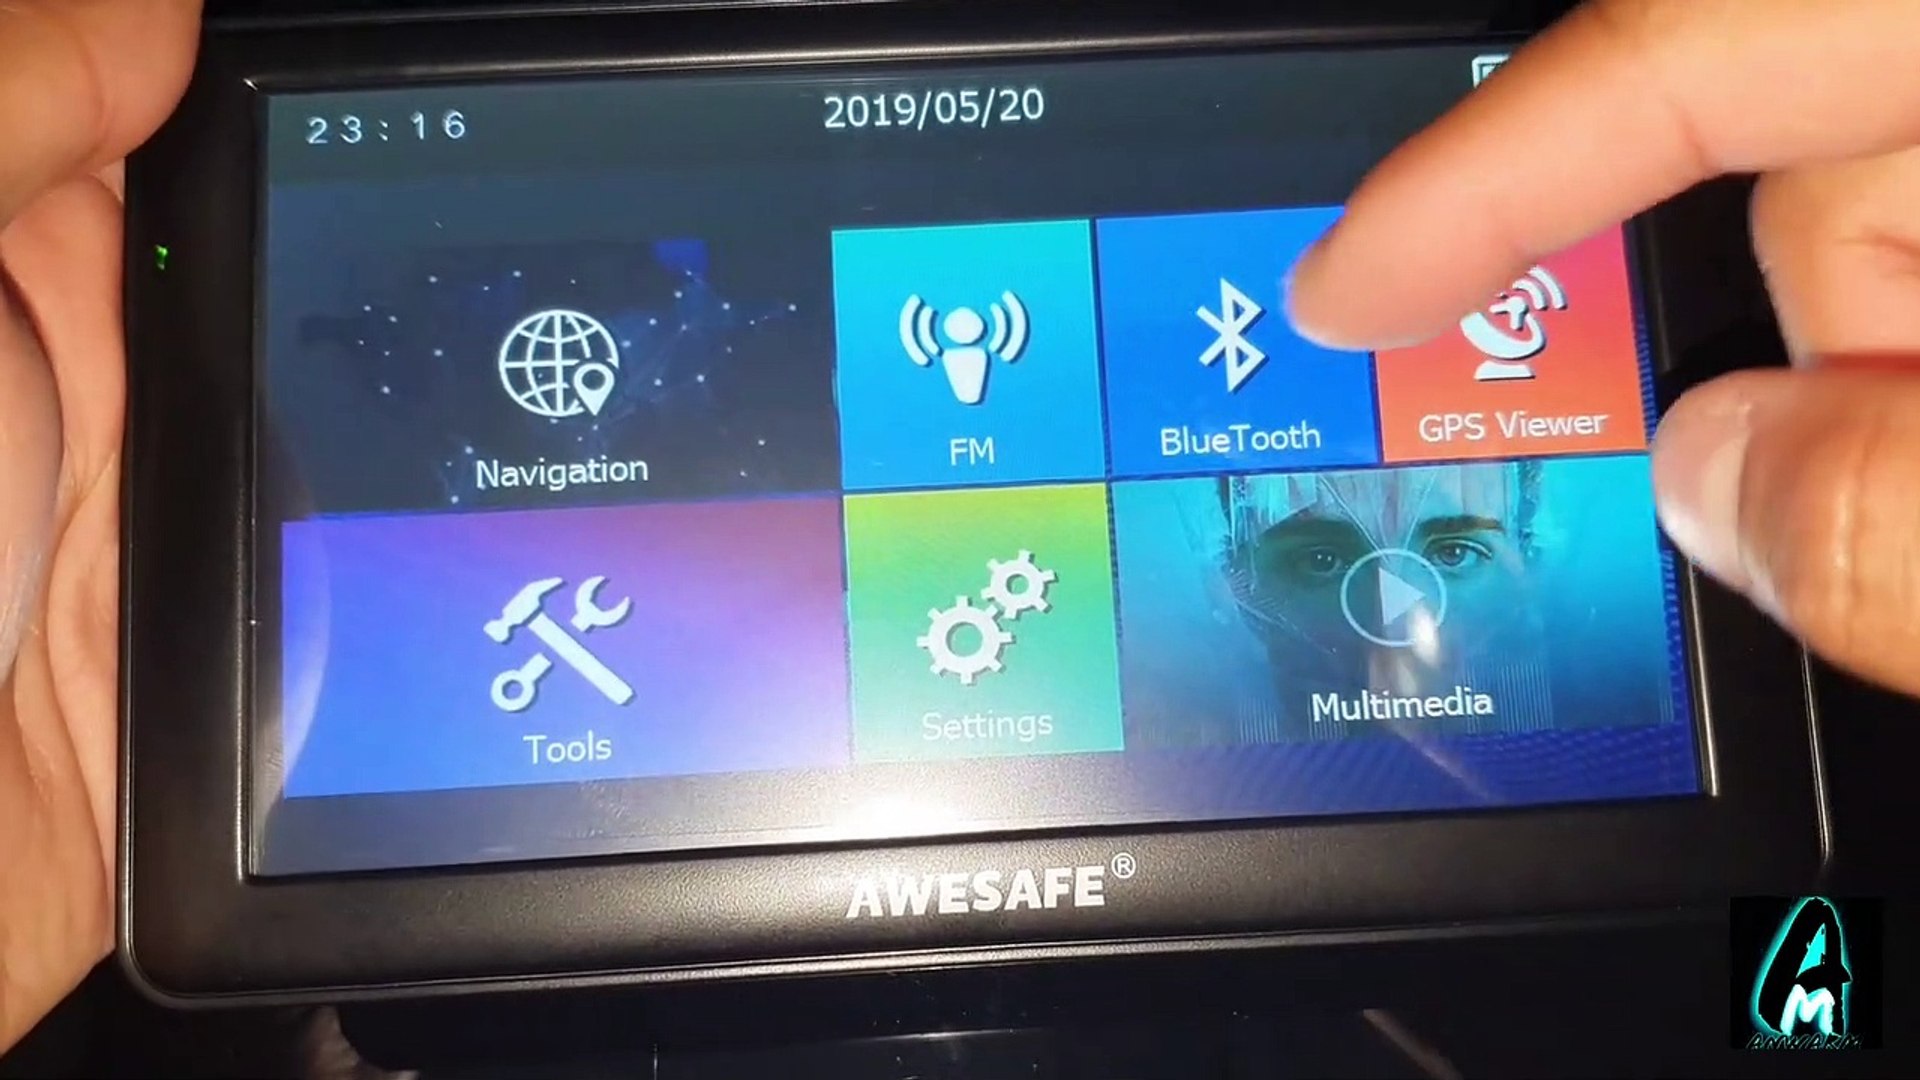 Awesafe A1 GPS Multimedia Car SatNav Navigation (Review) - video Dailymotion